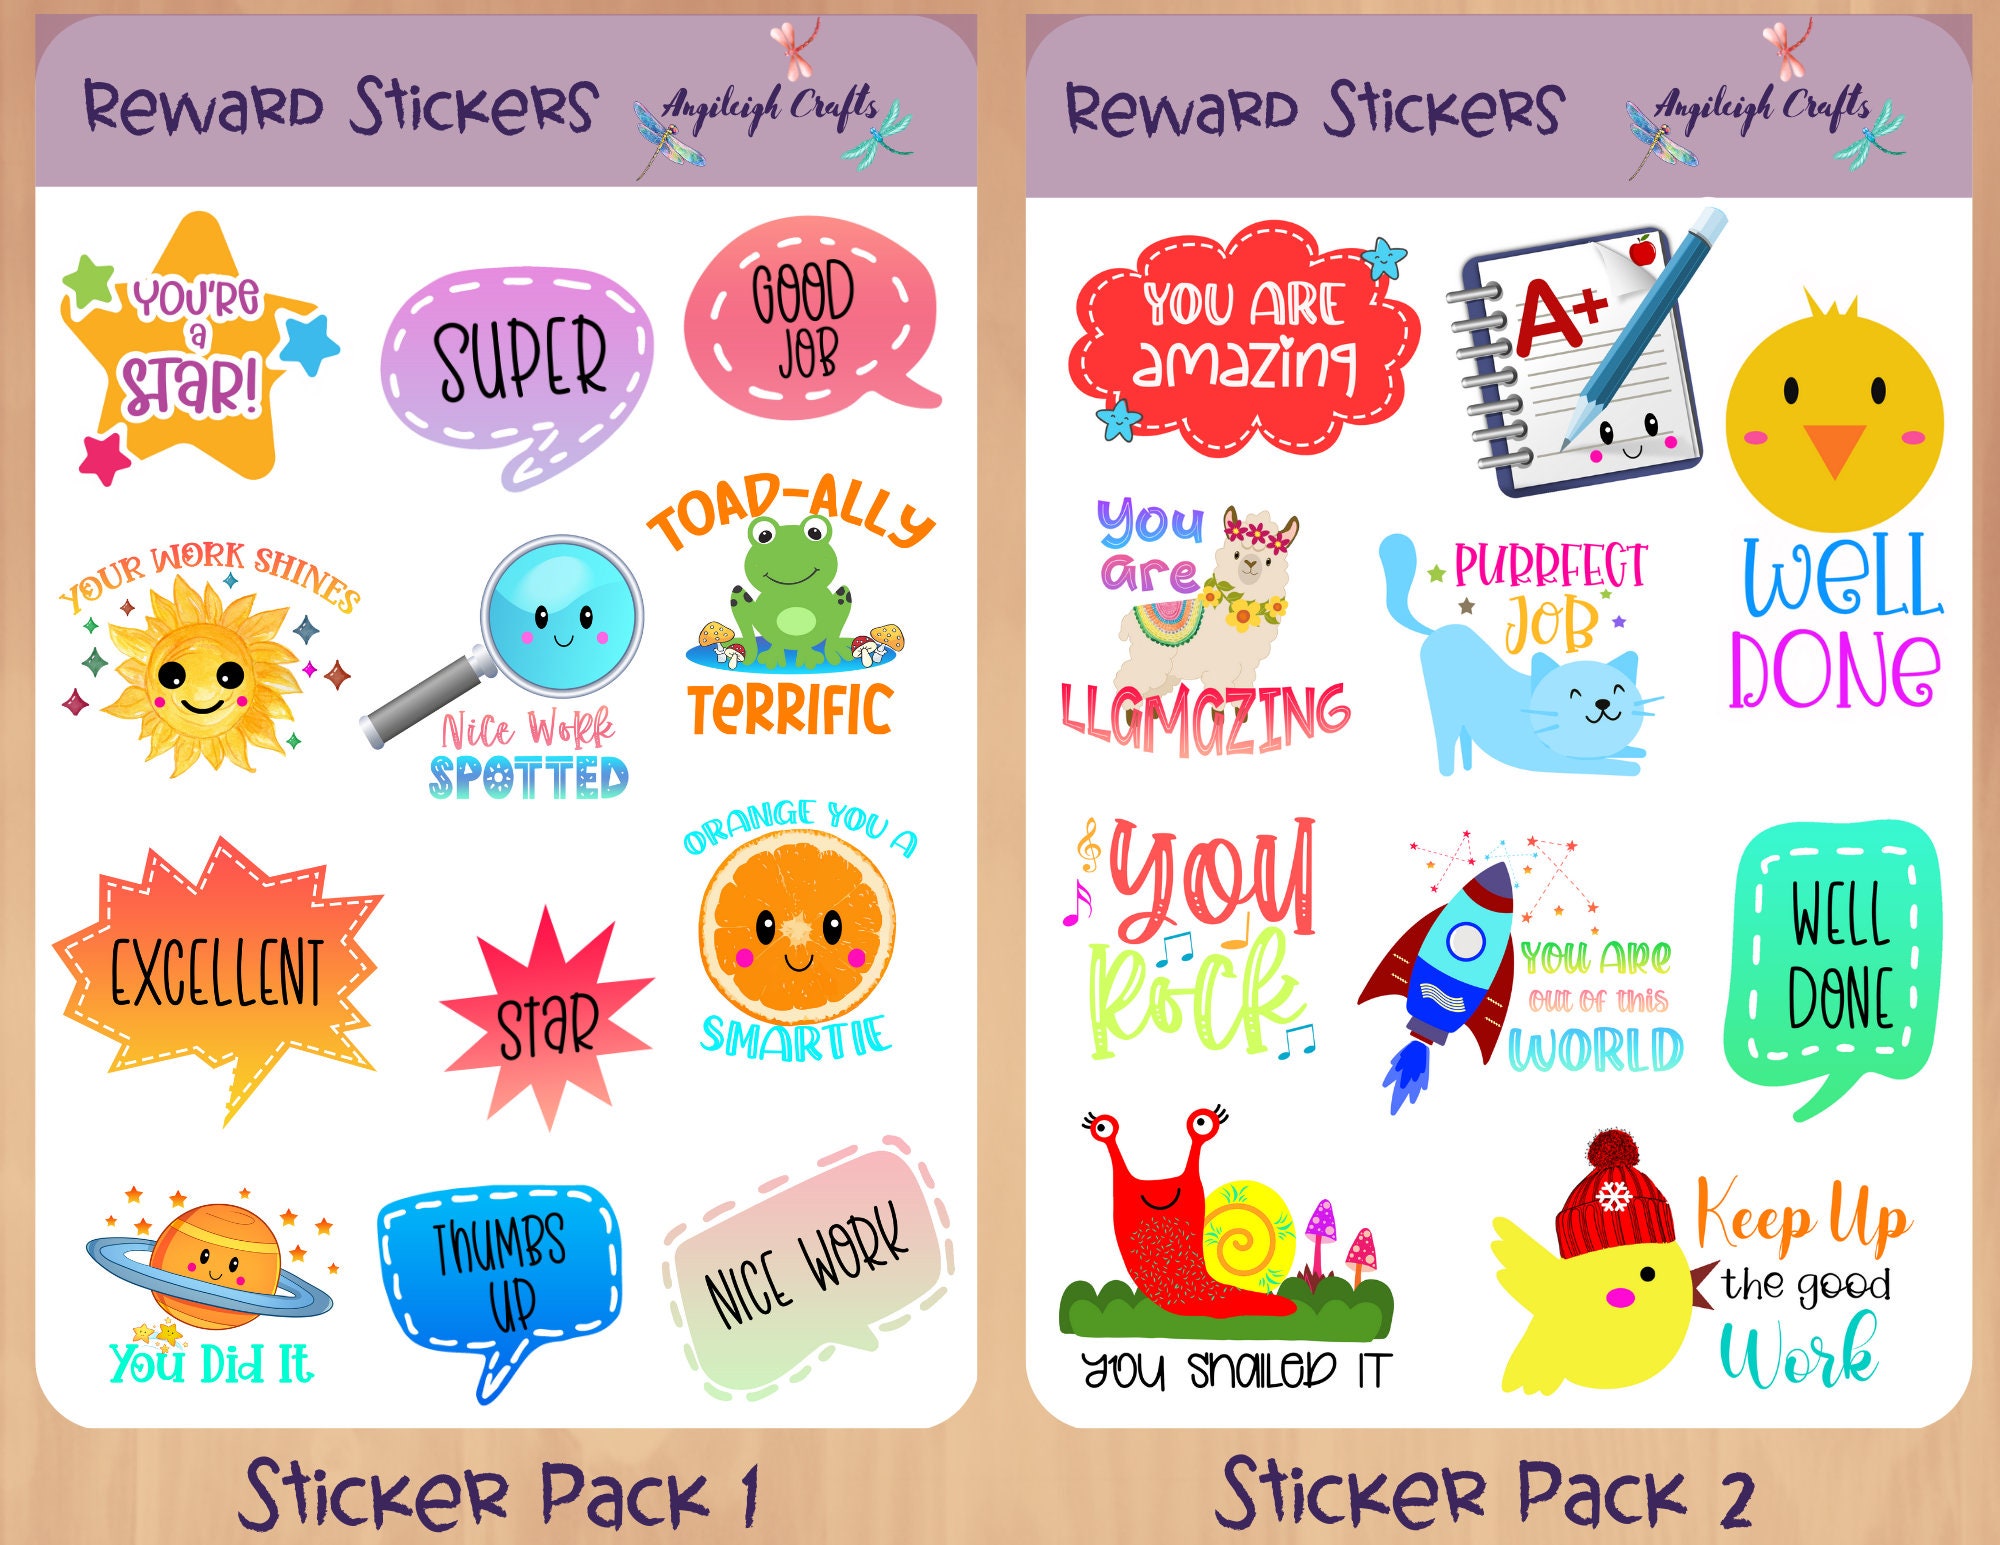 Teacher Reward Motivational Stickers for Children - nature Stock